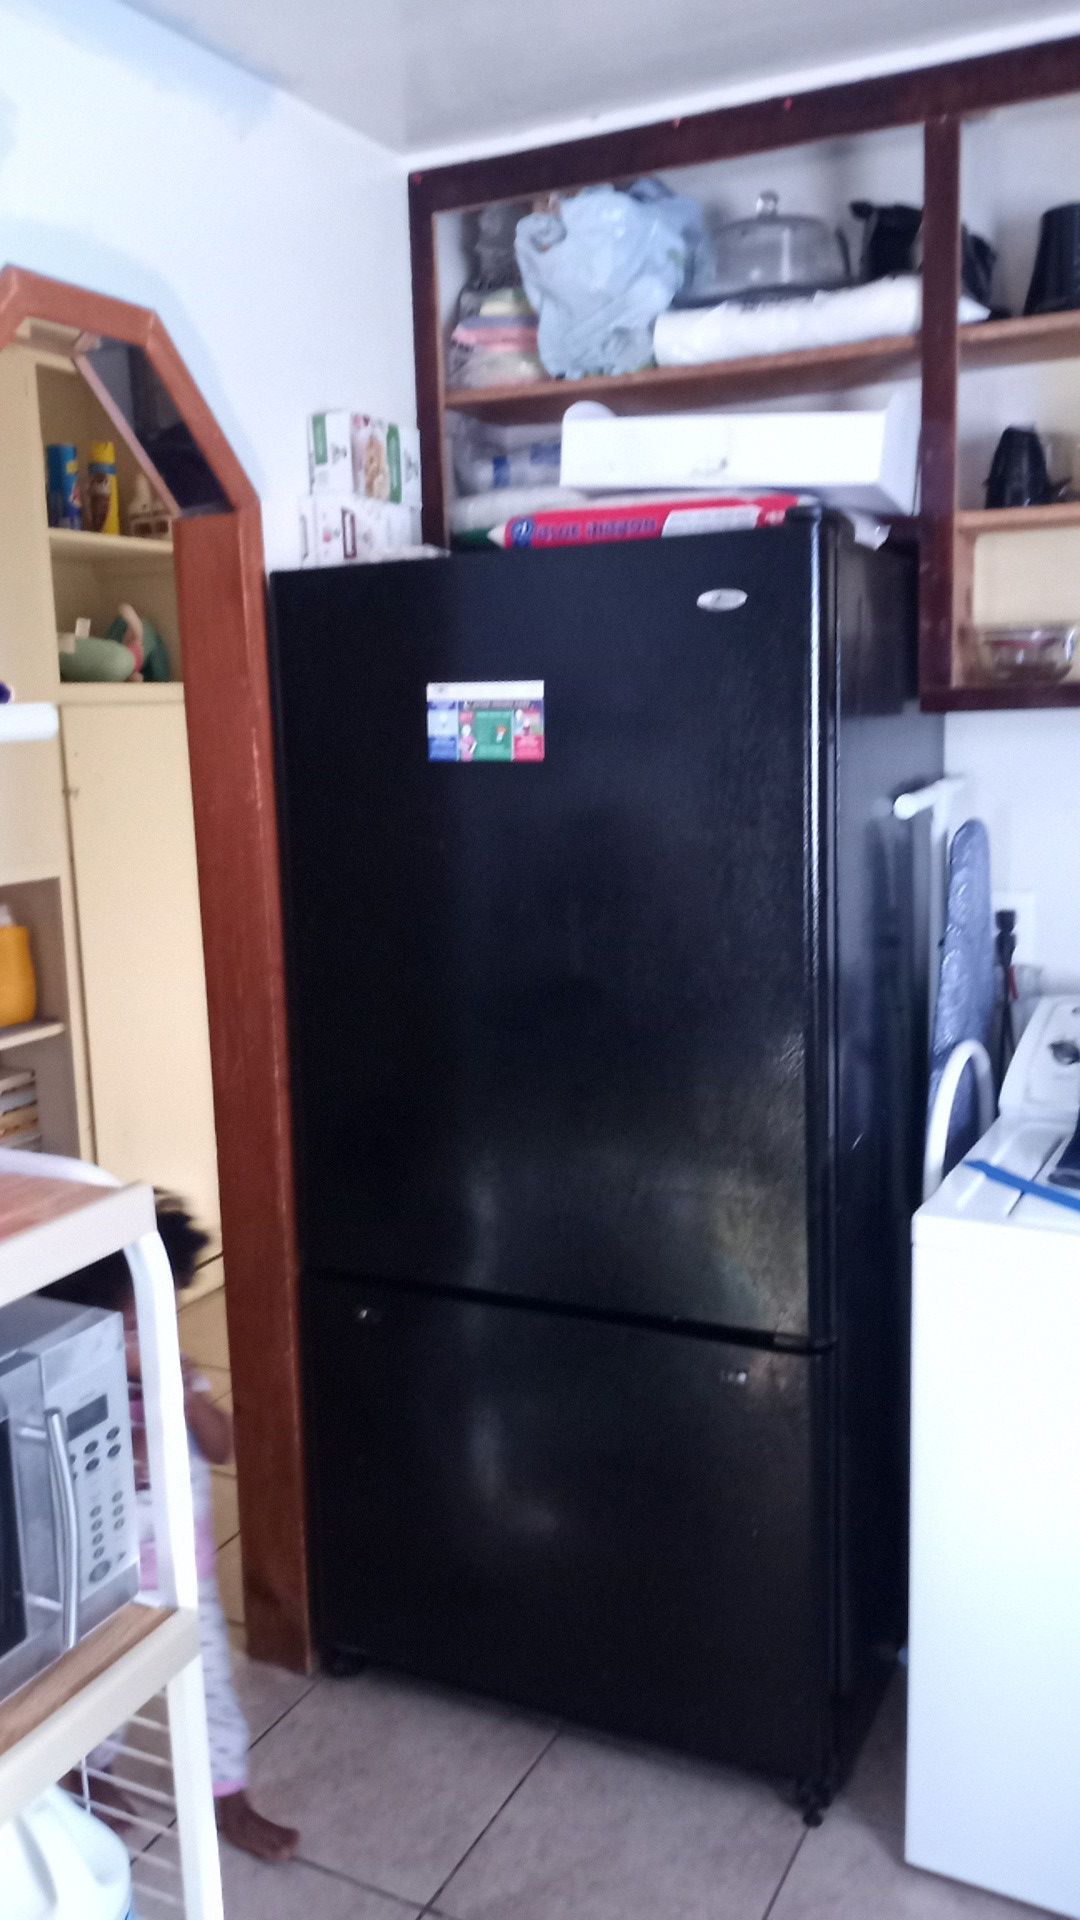 All black fridge with freezer on bottom. Not apt size